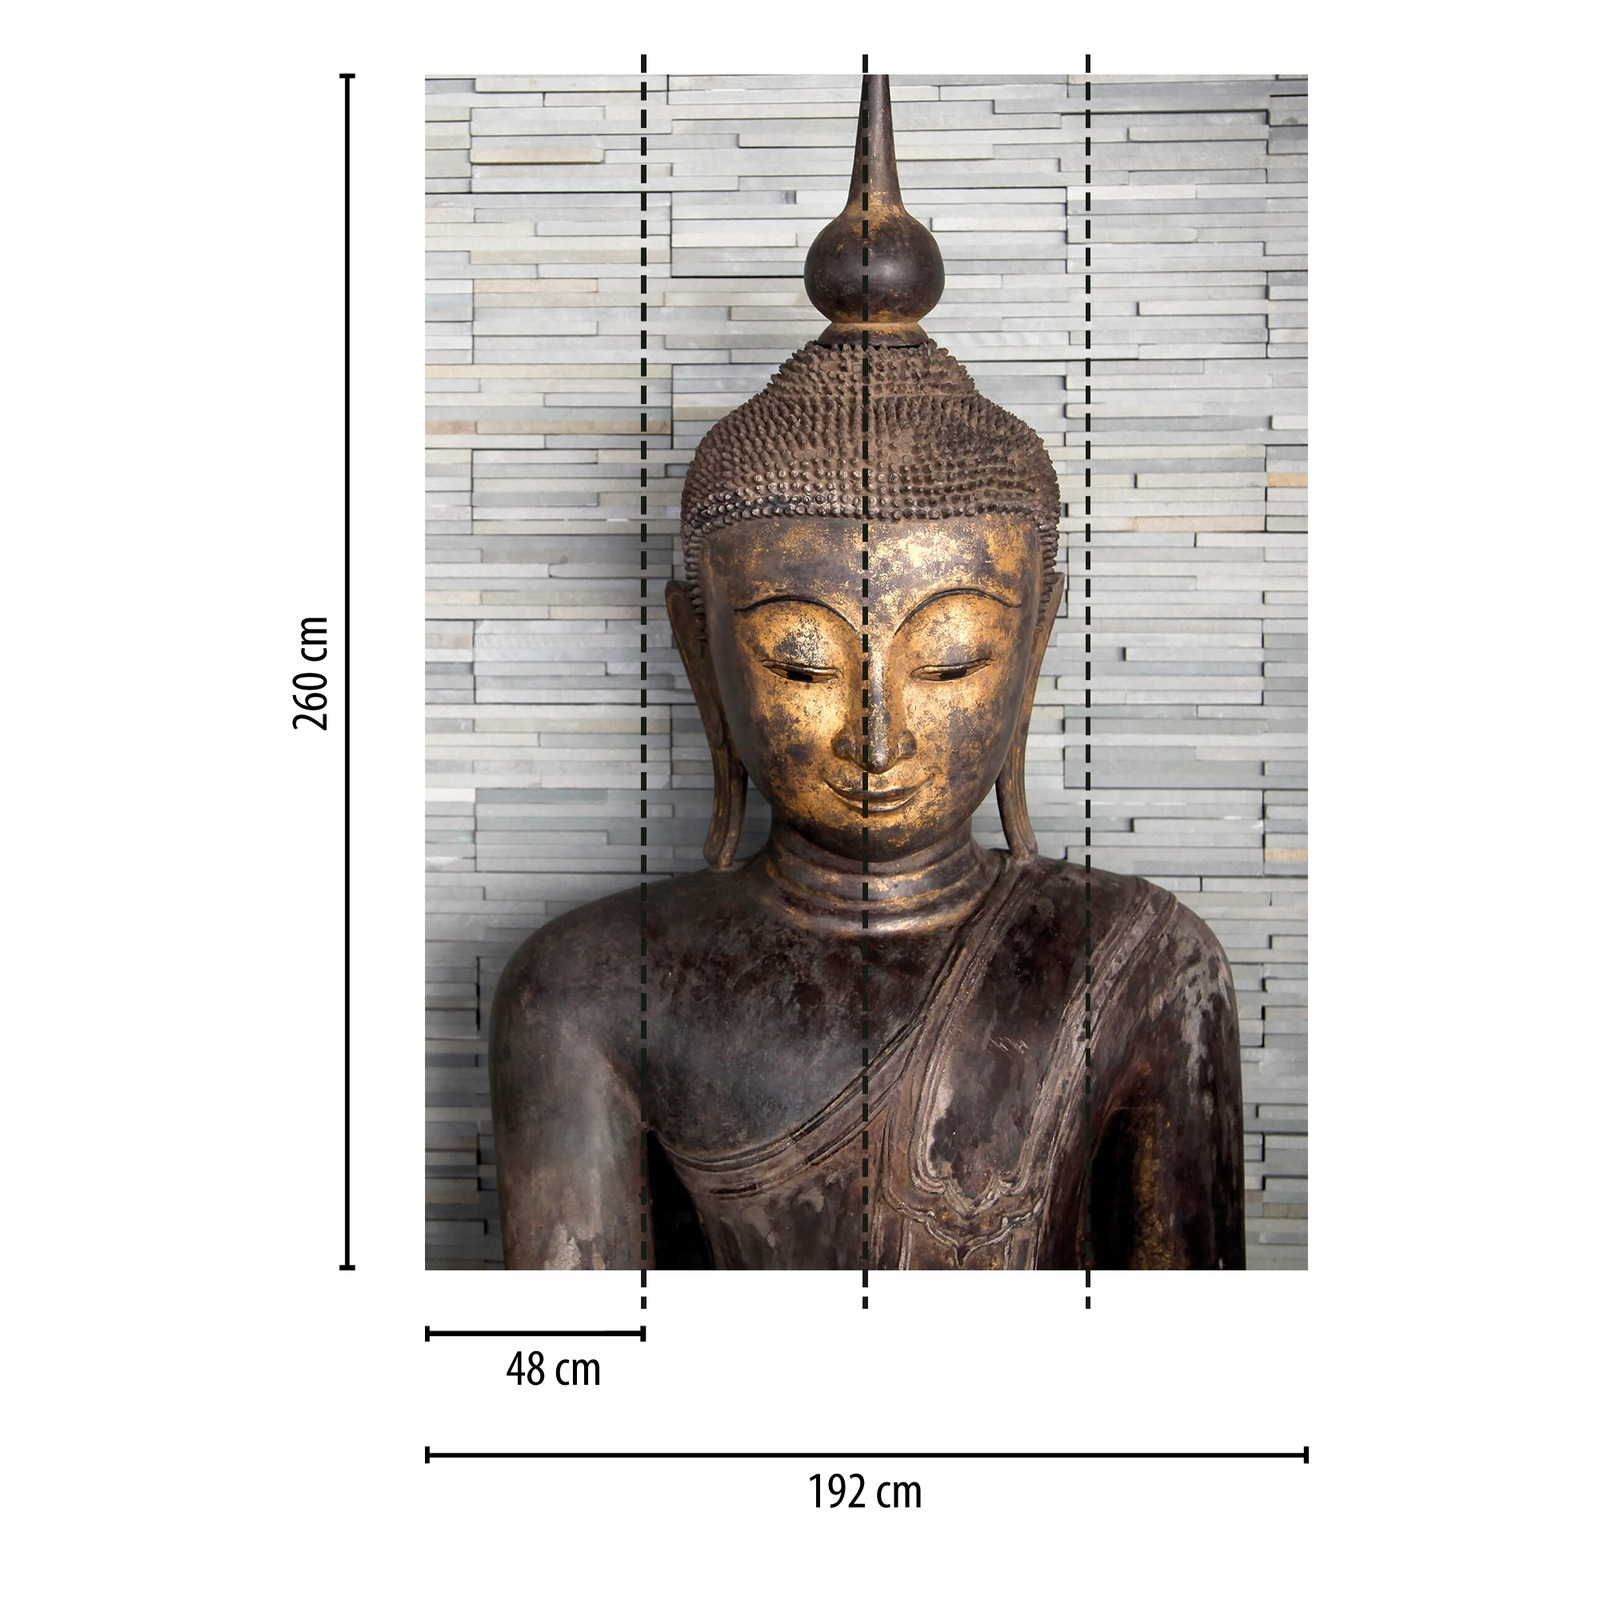             Photo wallpaper narrow with Buddha - Brown, Grey
        